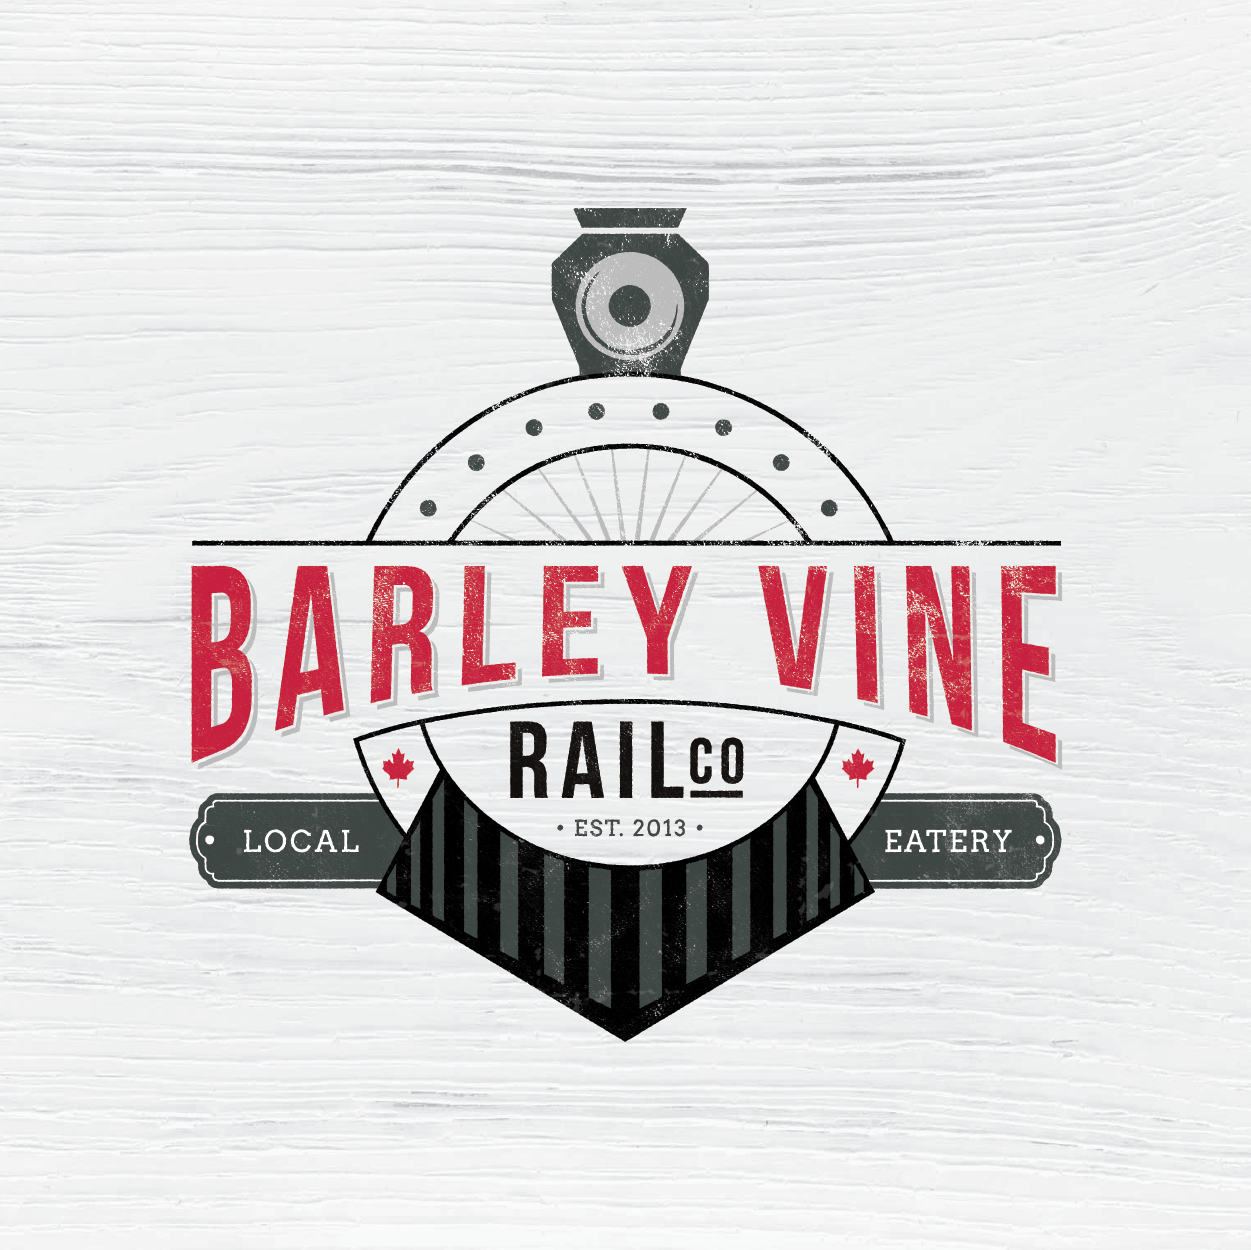 Barley Vine Rail Co.